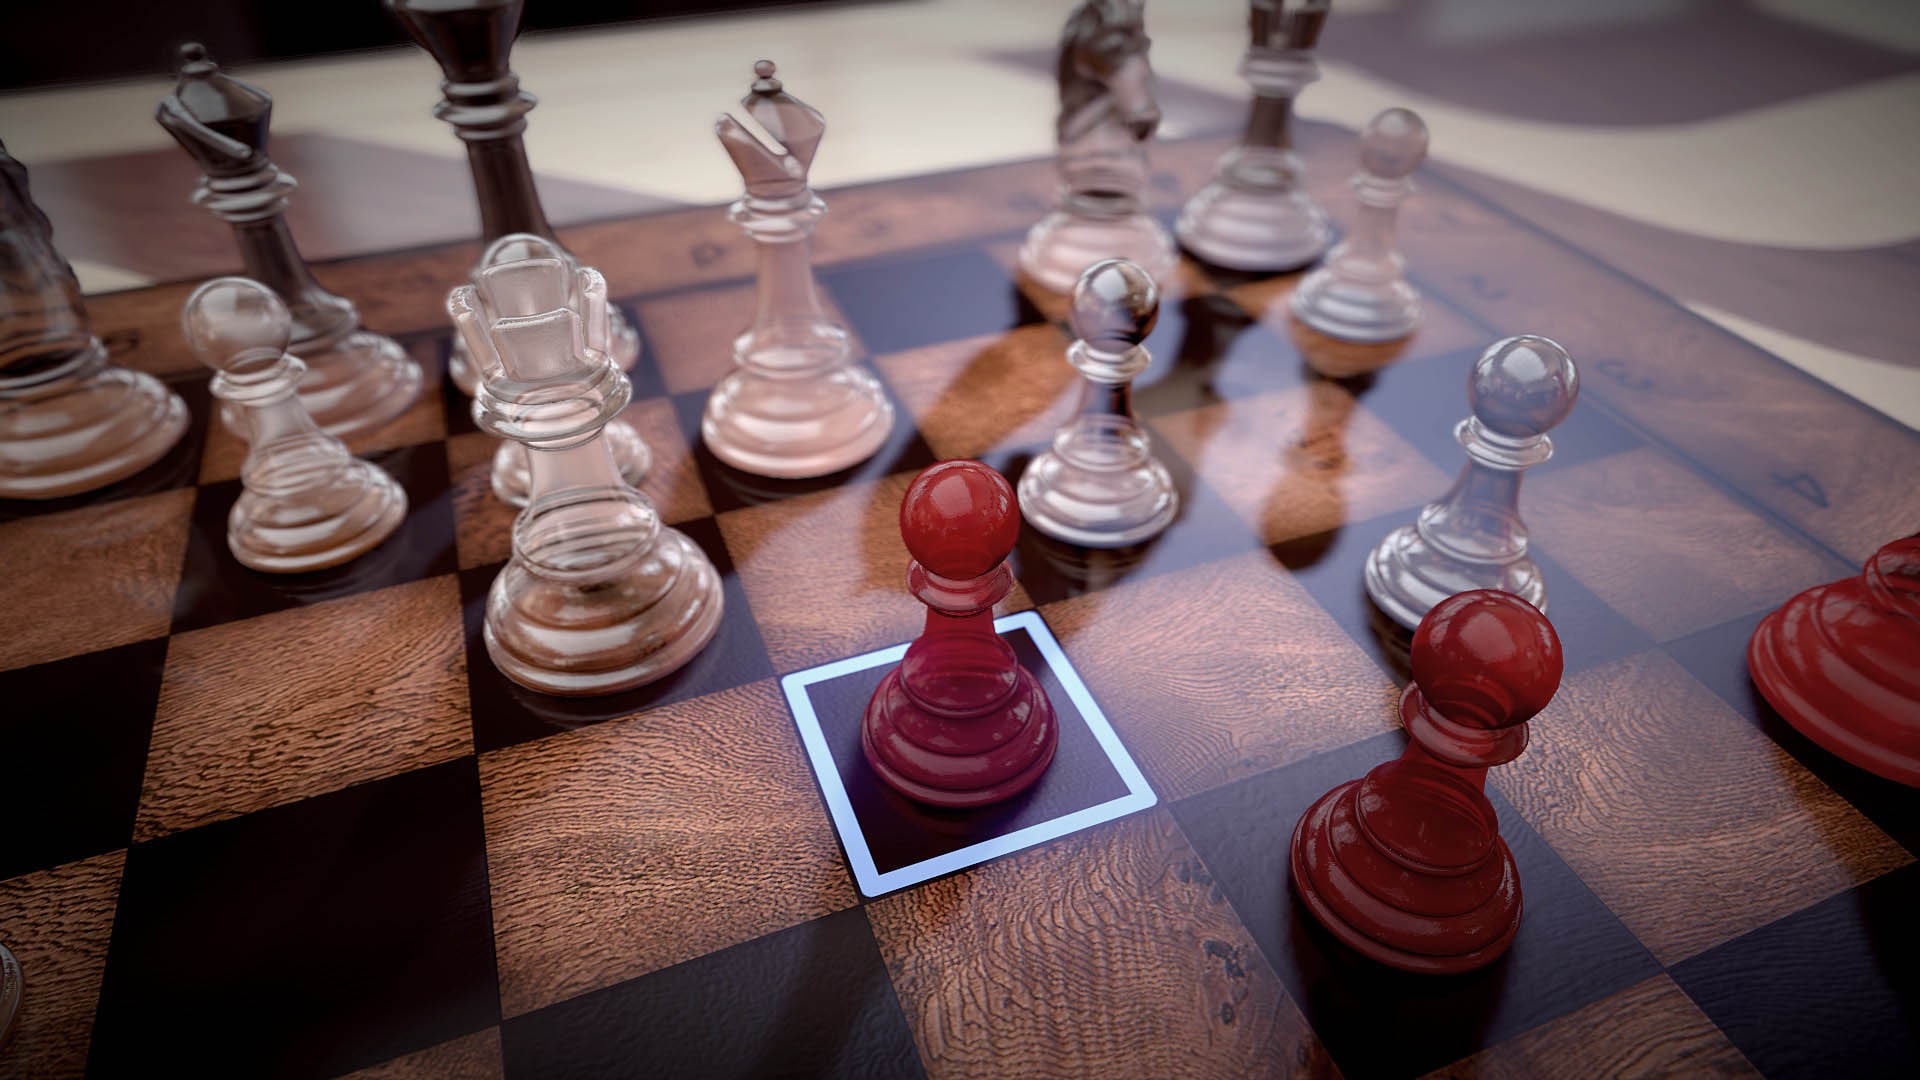 Chess Ultra é anunciado pela mesma desenvolvedora de Pure Chess - Conversa  de Sofá